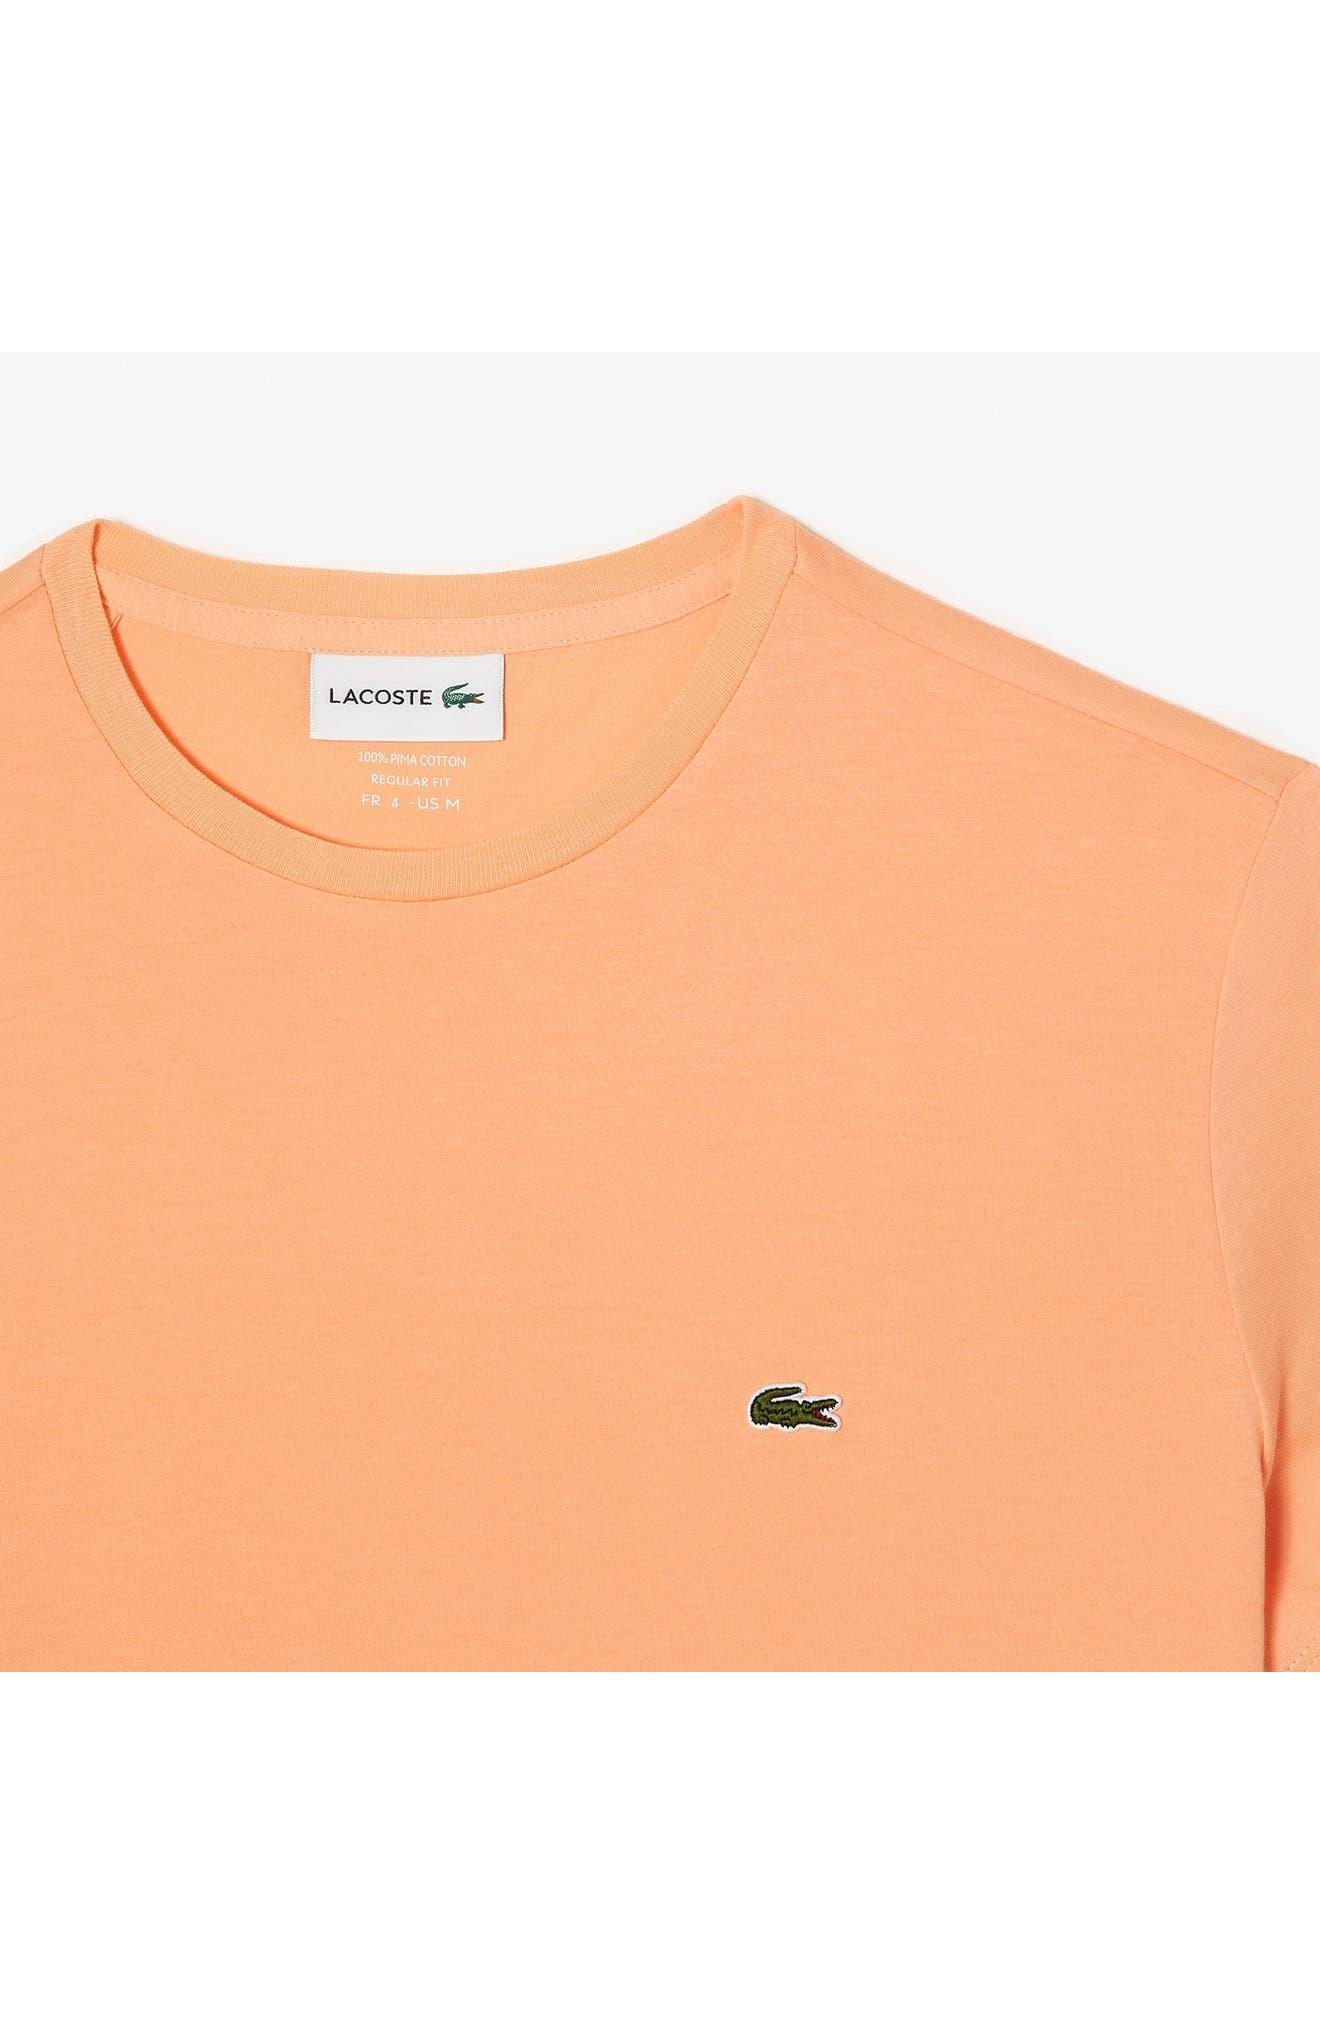 Lacoste Pima Cotton T-shirt in Orange for Men | Lyst